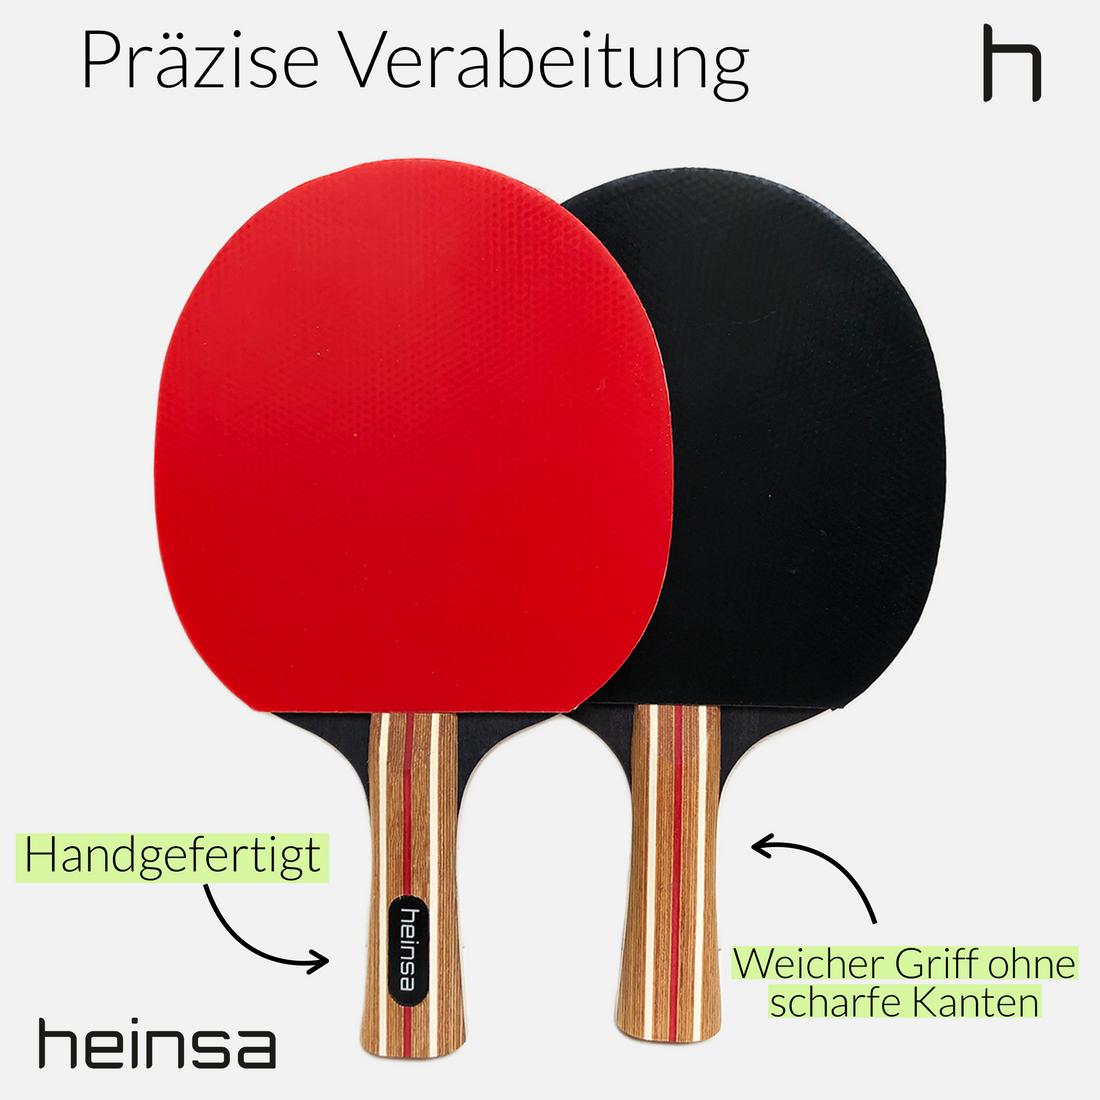 heinsa table tennis bat set + extra balls "Salvador" bundle